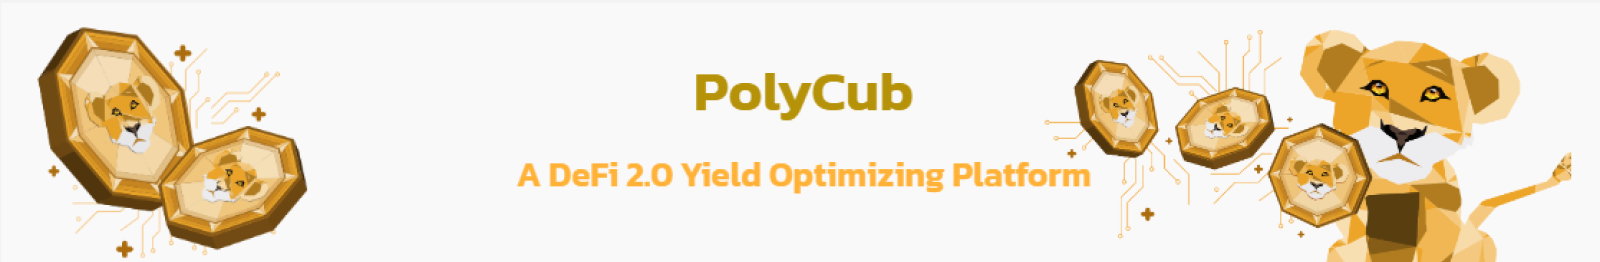 polycub.png